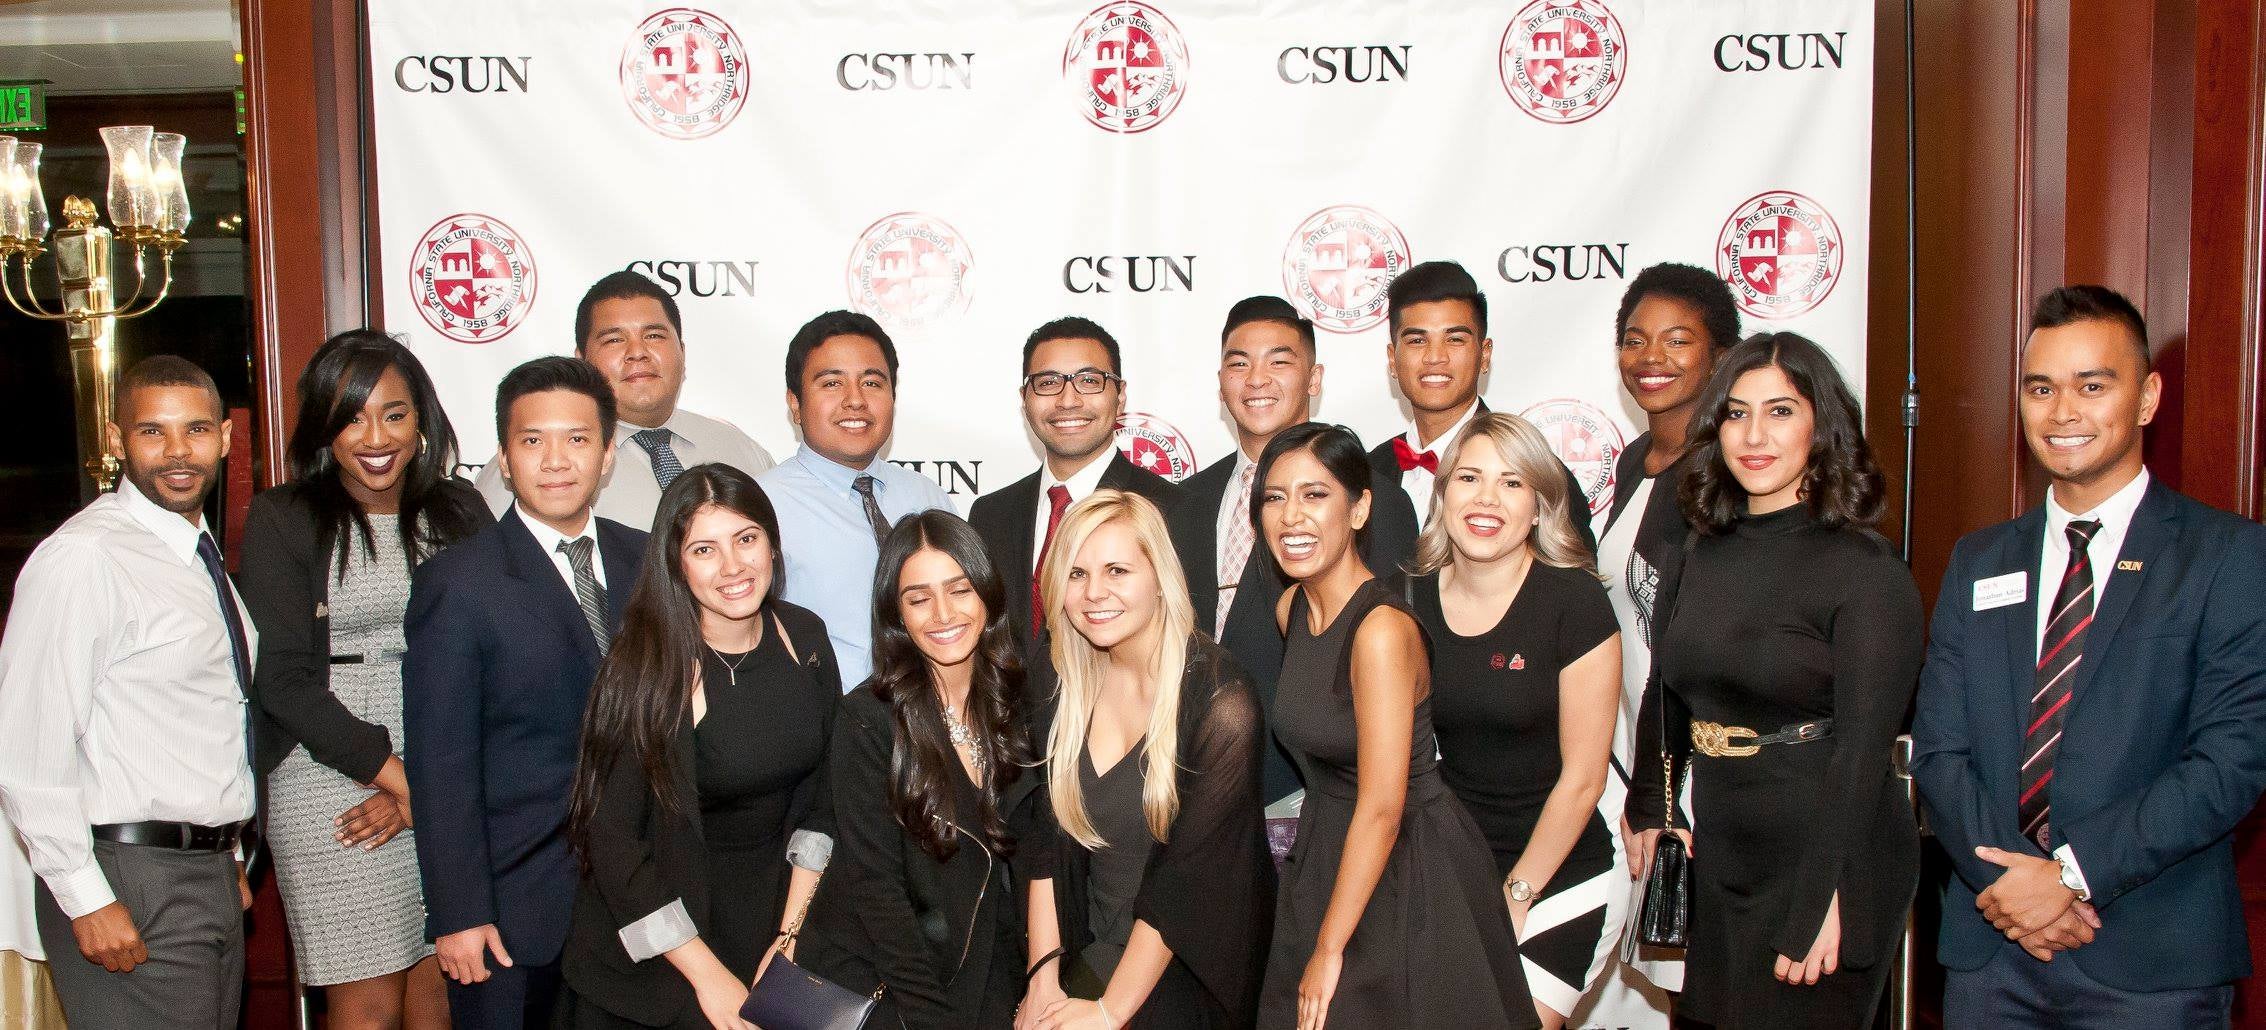 Jimmy Guevara with a group of CSUN Alumni